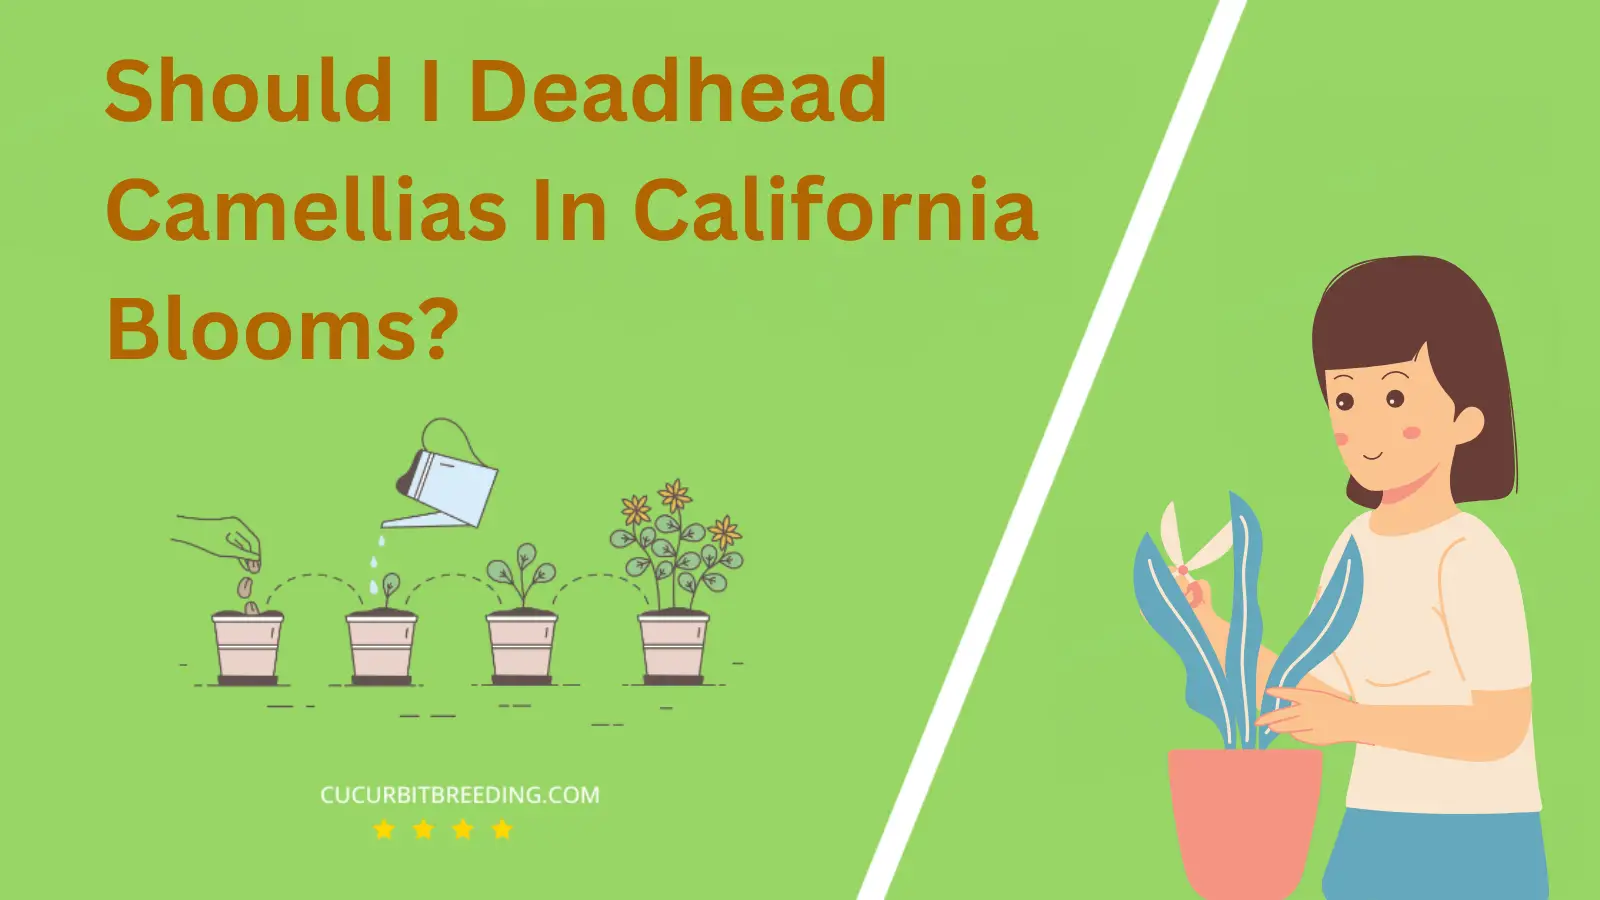 Should I Deadhead Camellias In California Blooms?